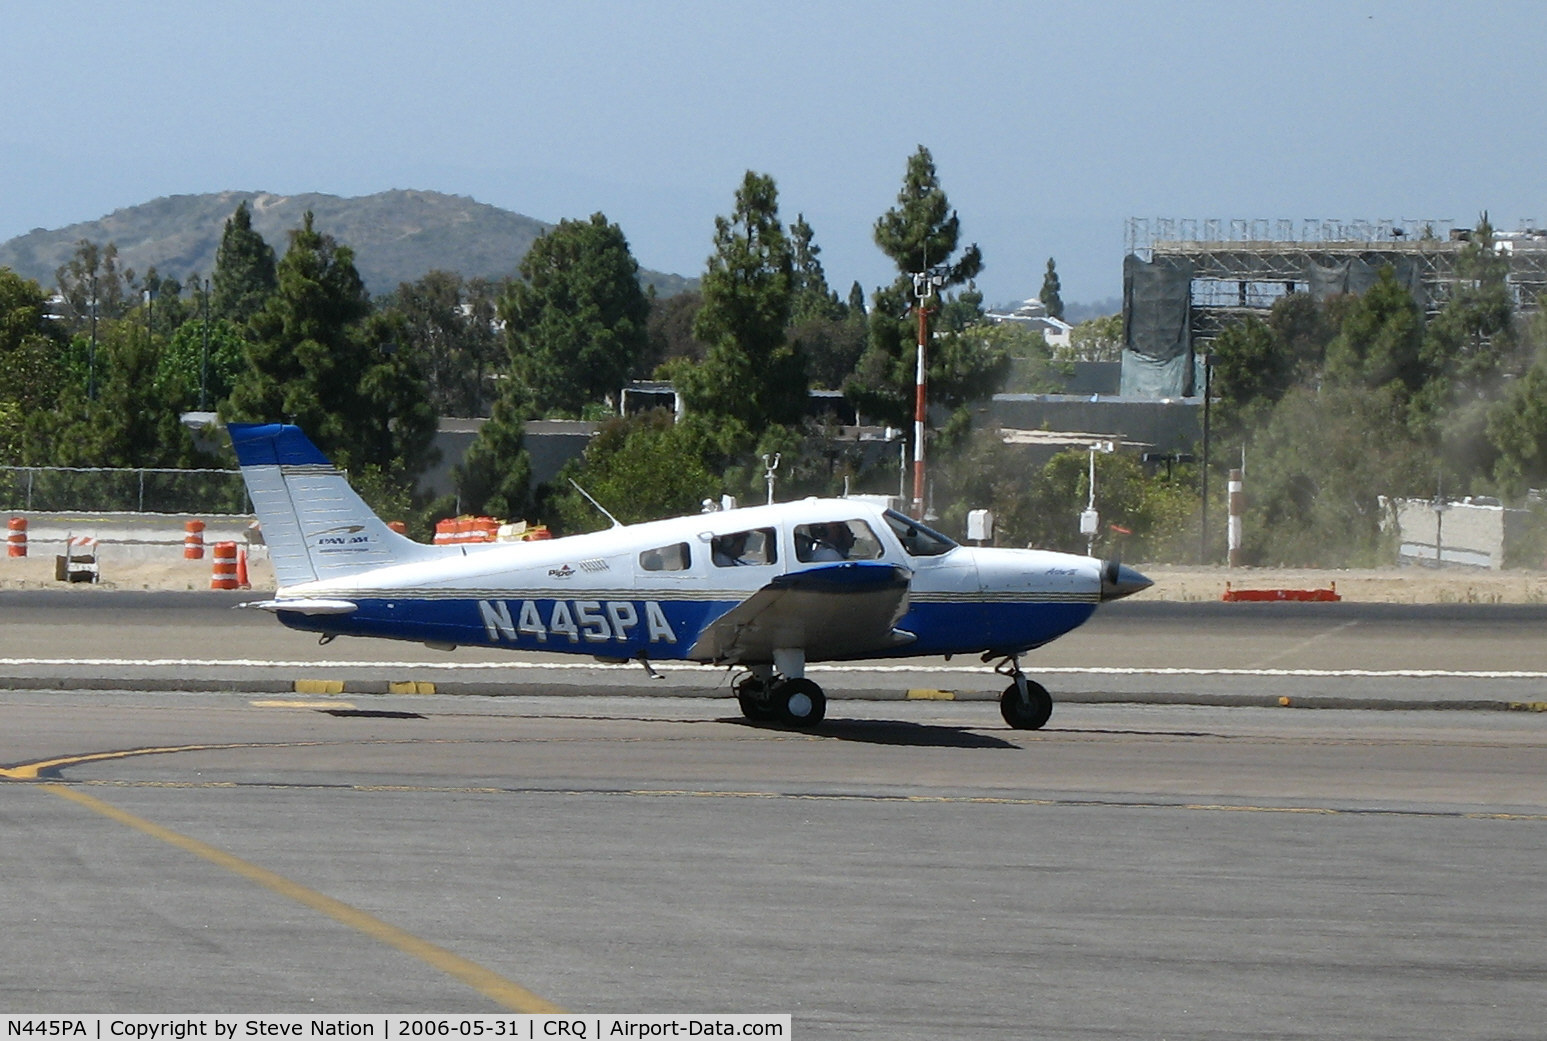 N445PA, 2001 Piper PA-28-181 C/N 2843500, Pan Am Flight Training 2001 Piper PA-28-181 (w/titles) taxying @ McClellan-Palomar Airport, CA